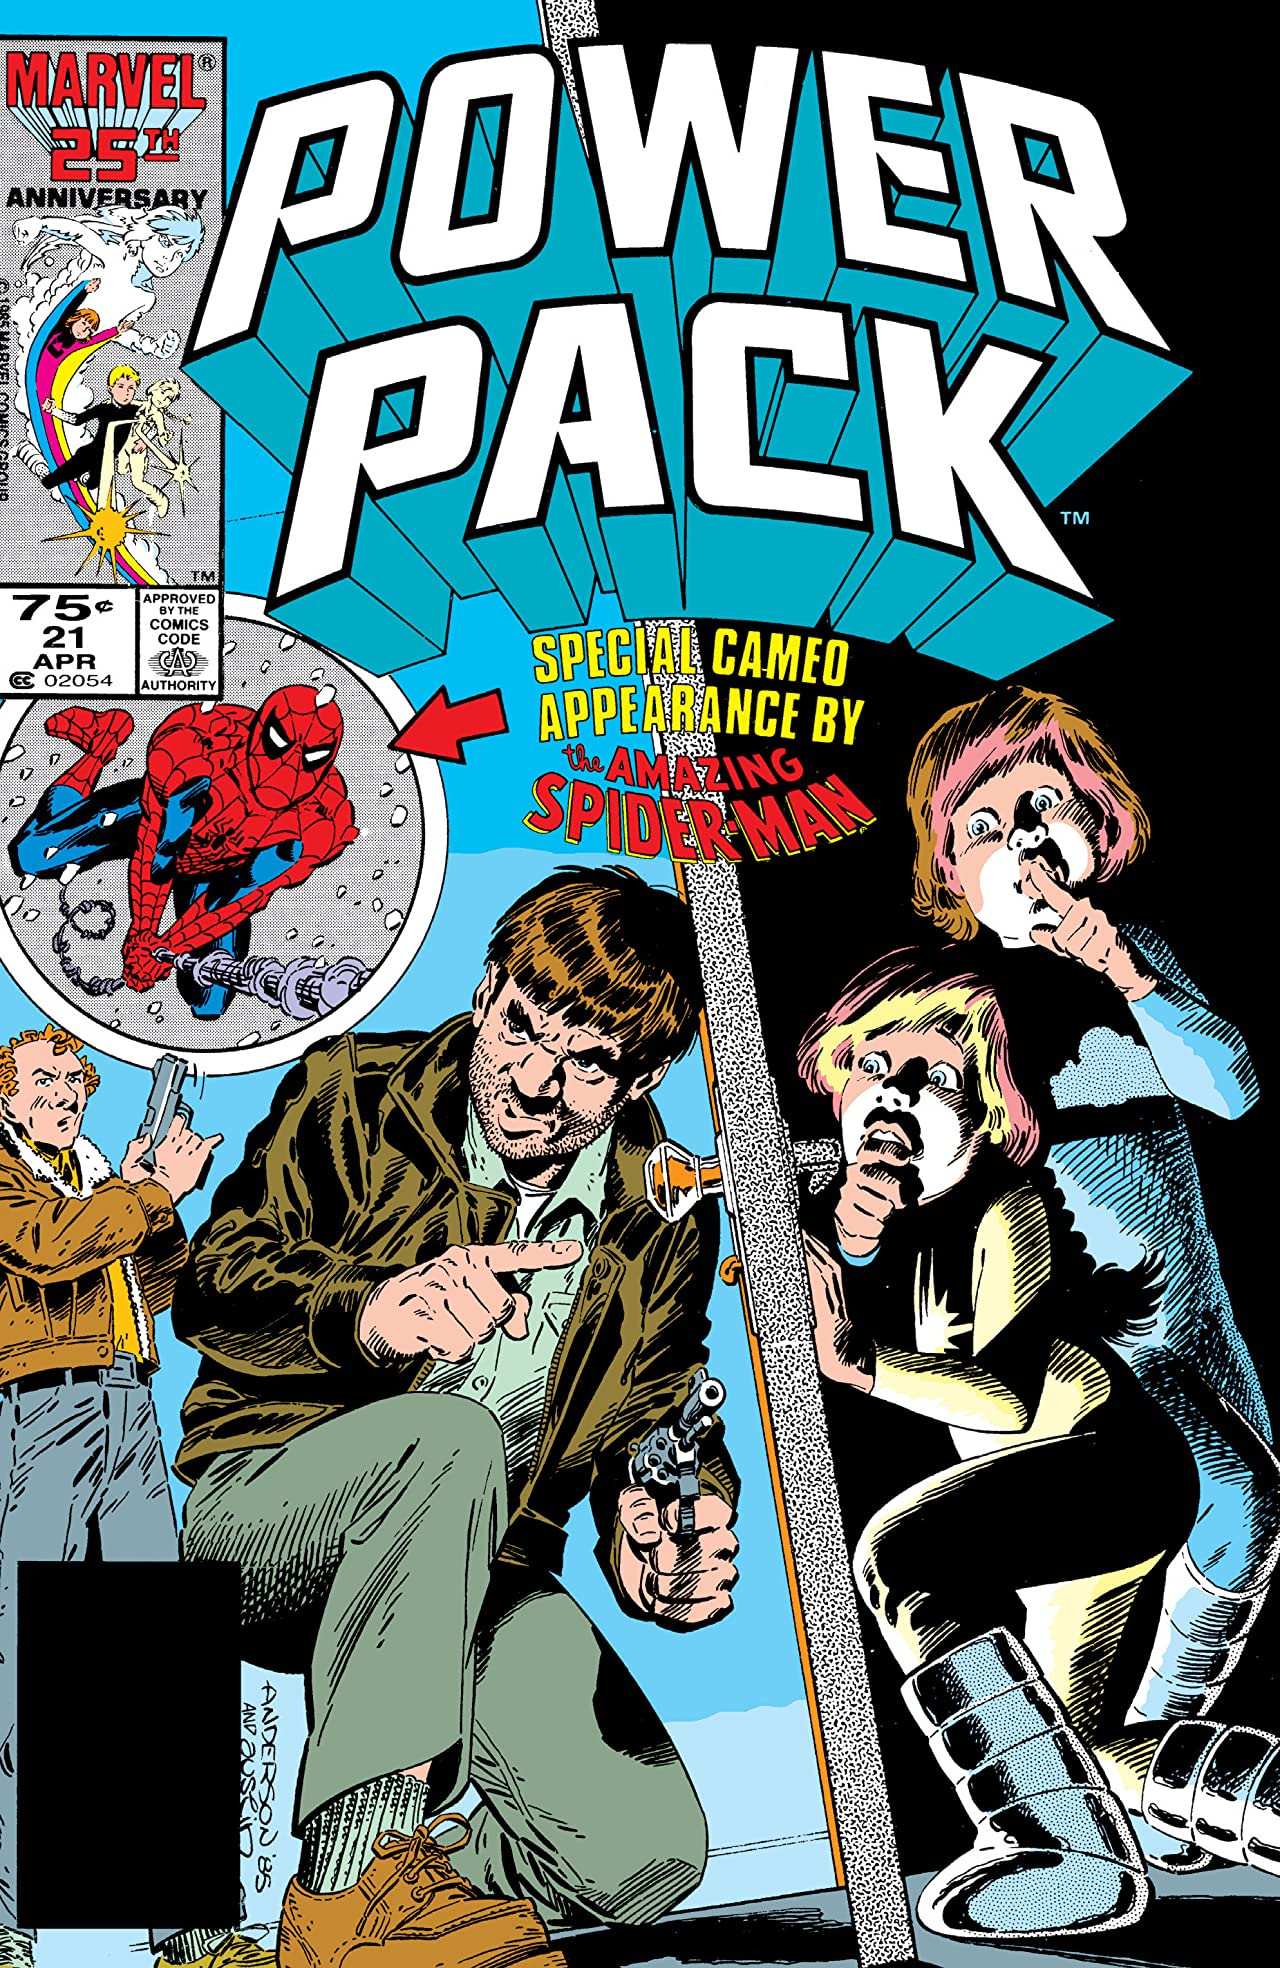 Power packing комиксы. Noweyr Pack.